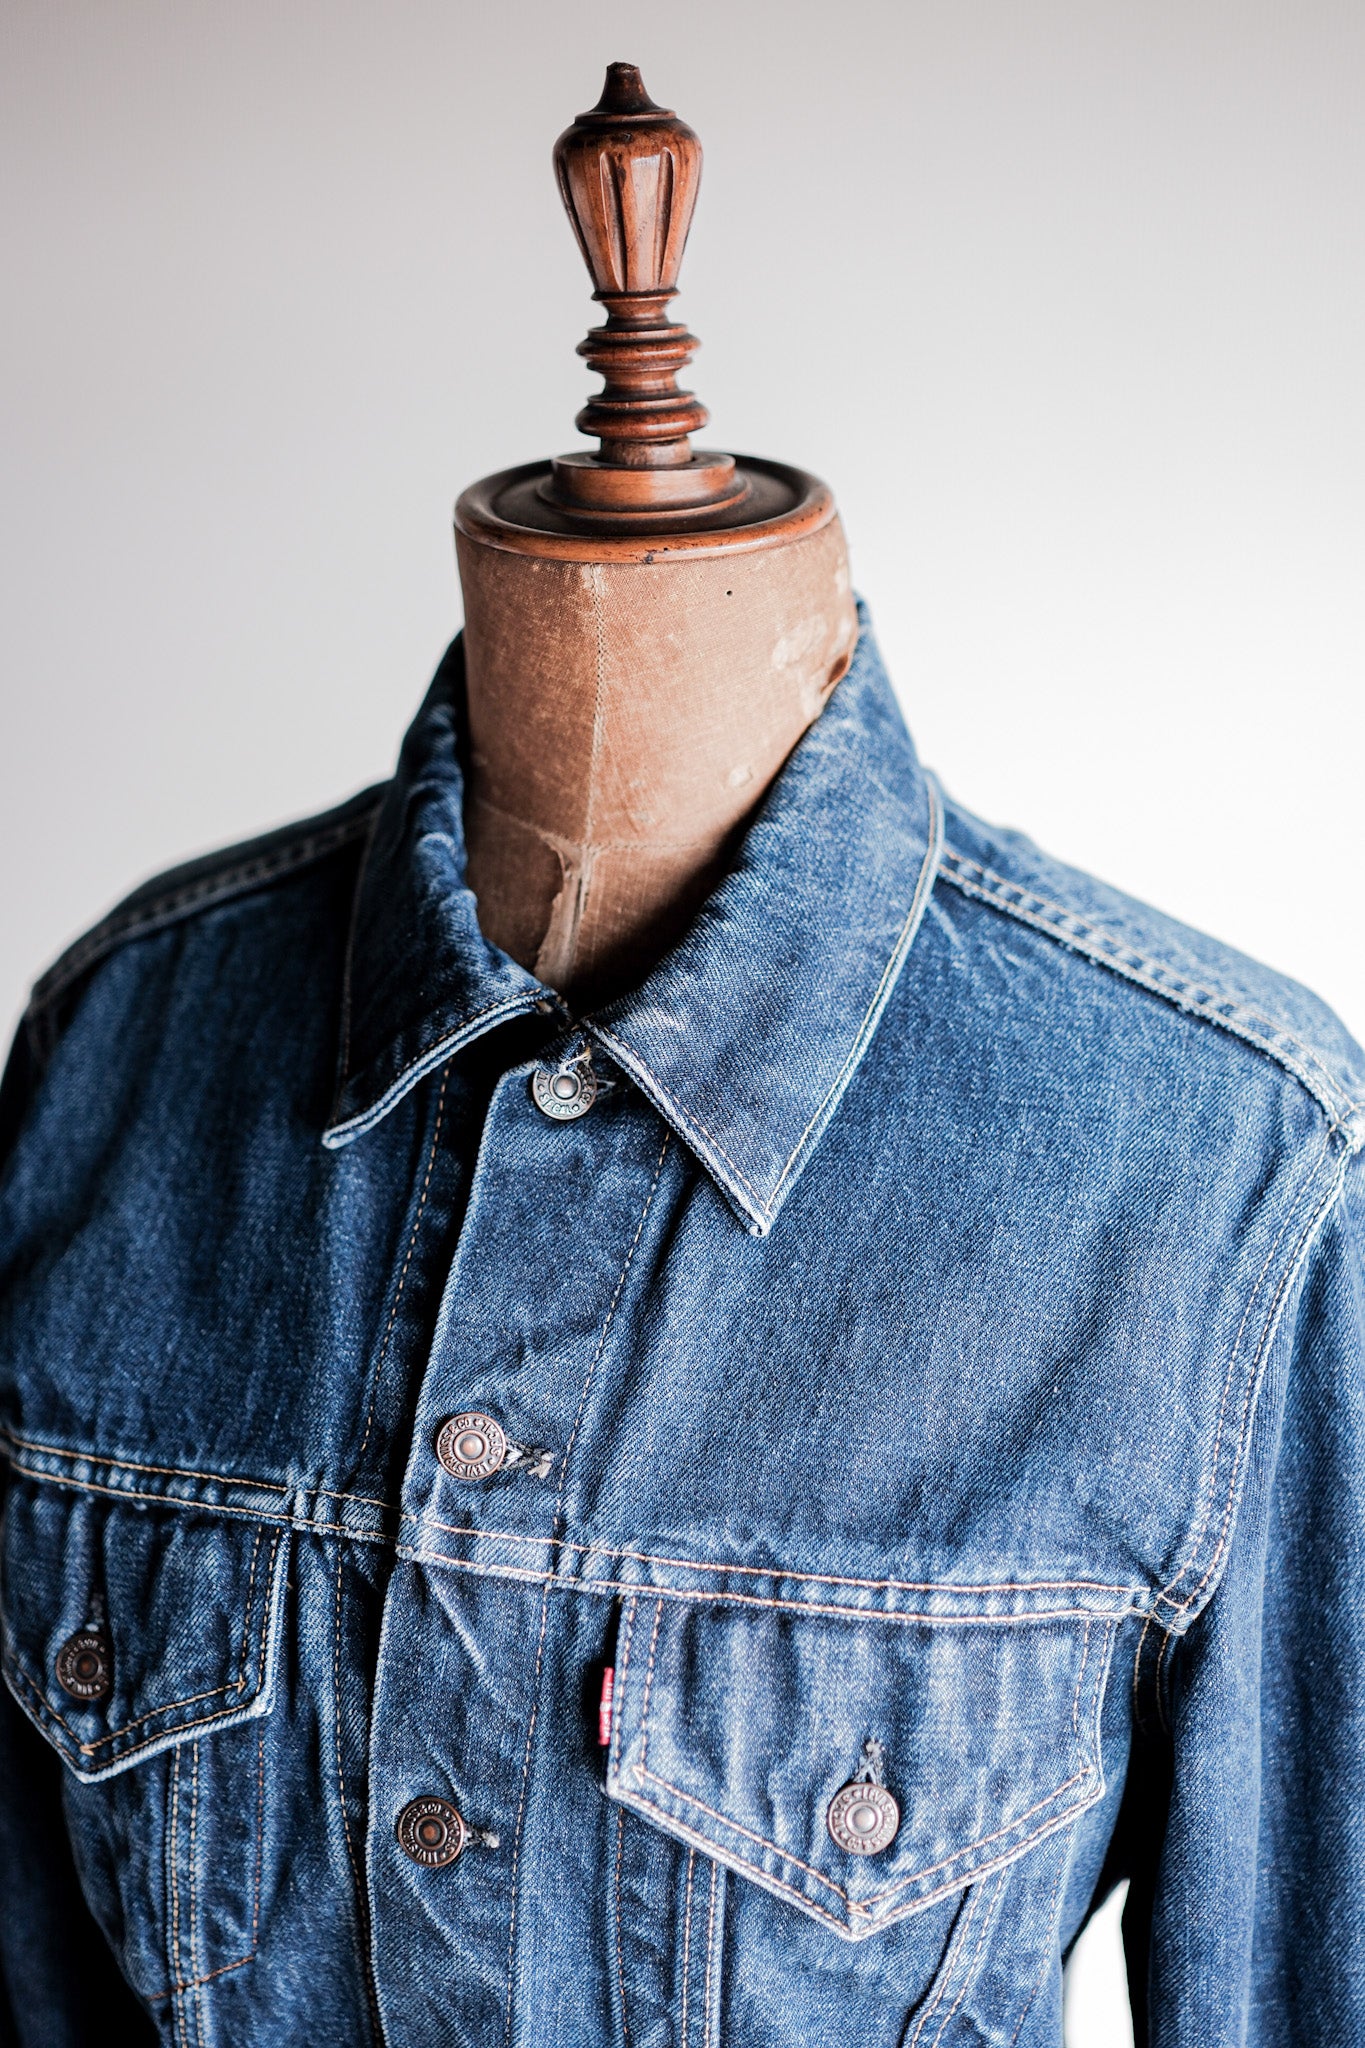 [~ 60's] Vintage Levi 557 Jacket Jacket Size.40 "Big E"